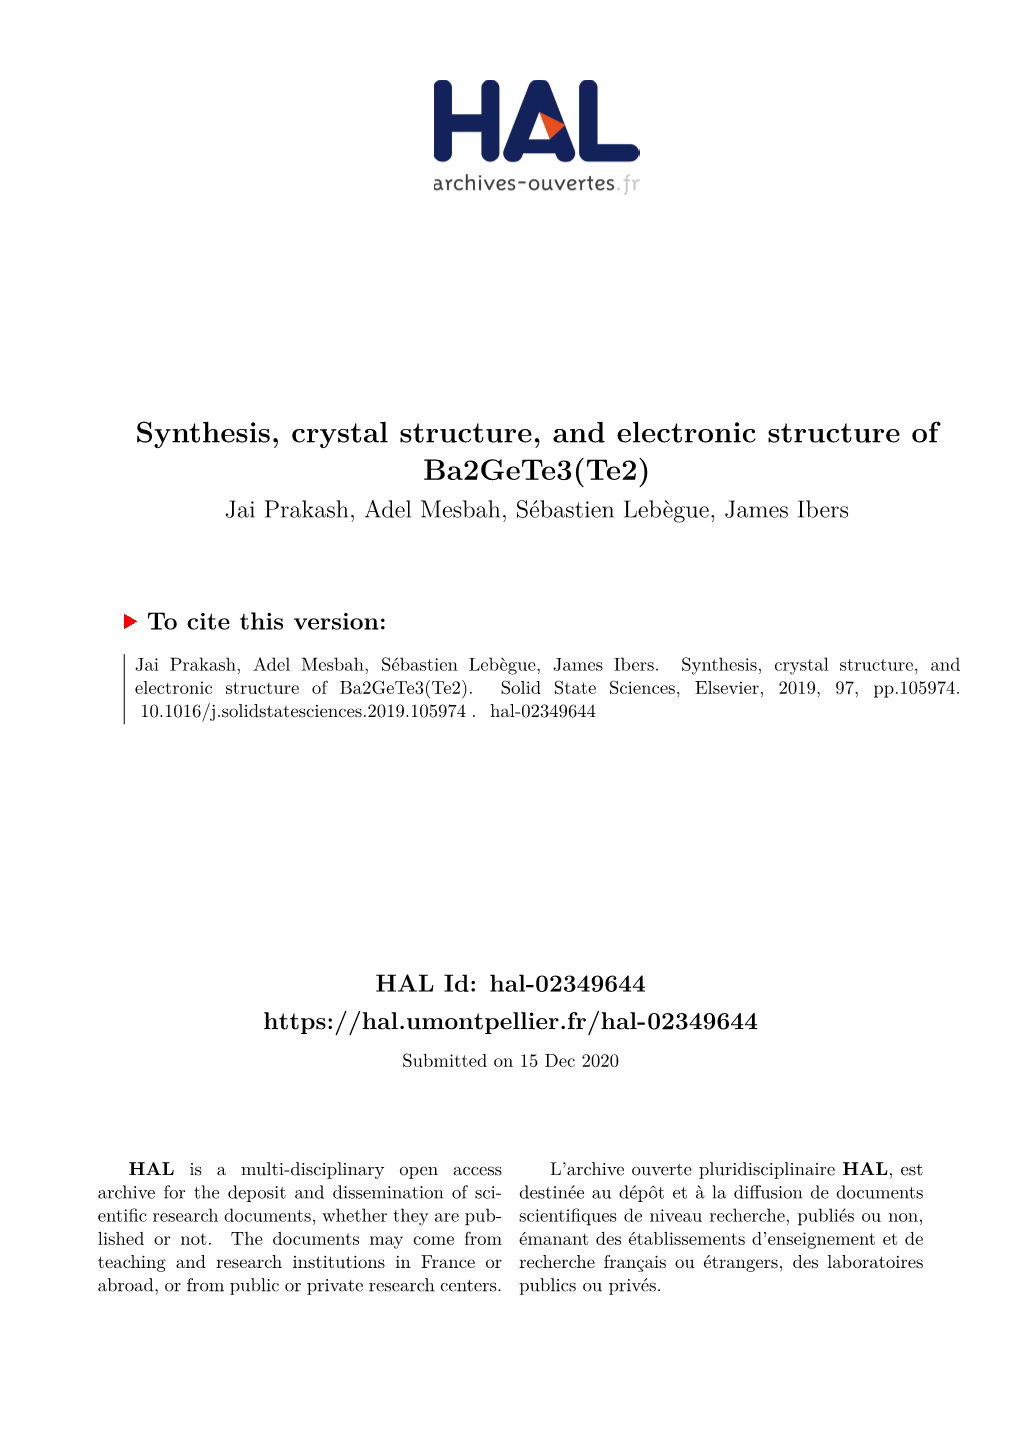 Synthesis, Crystal Structure, and Electronic Structure of Ba2gete3(Te2) Jai Prakash, Adel Mesbah, Sébastien Lebègue, James Ibers